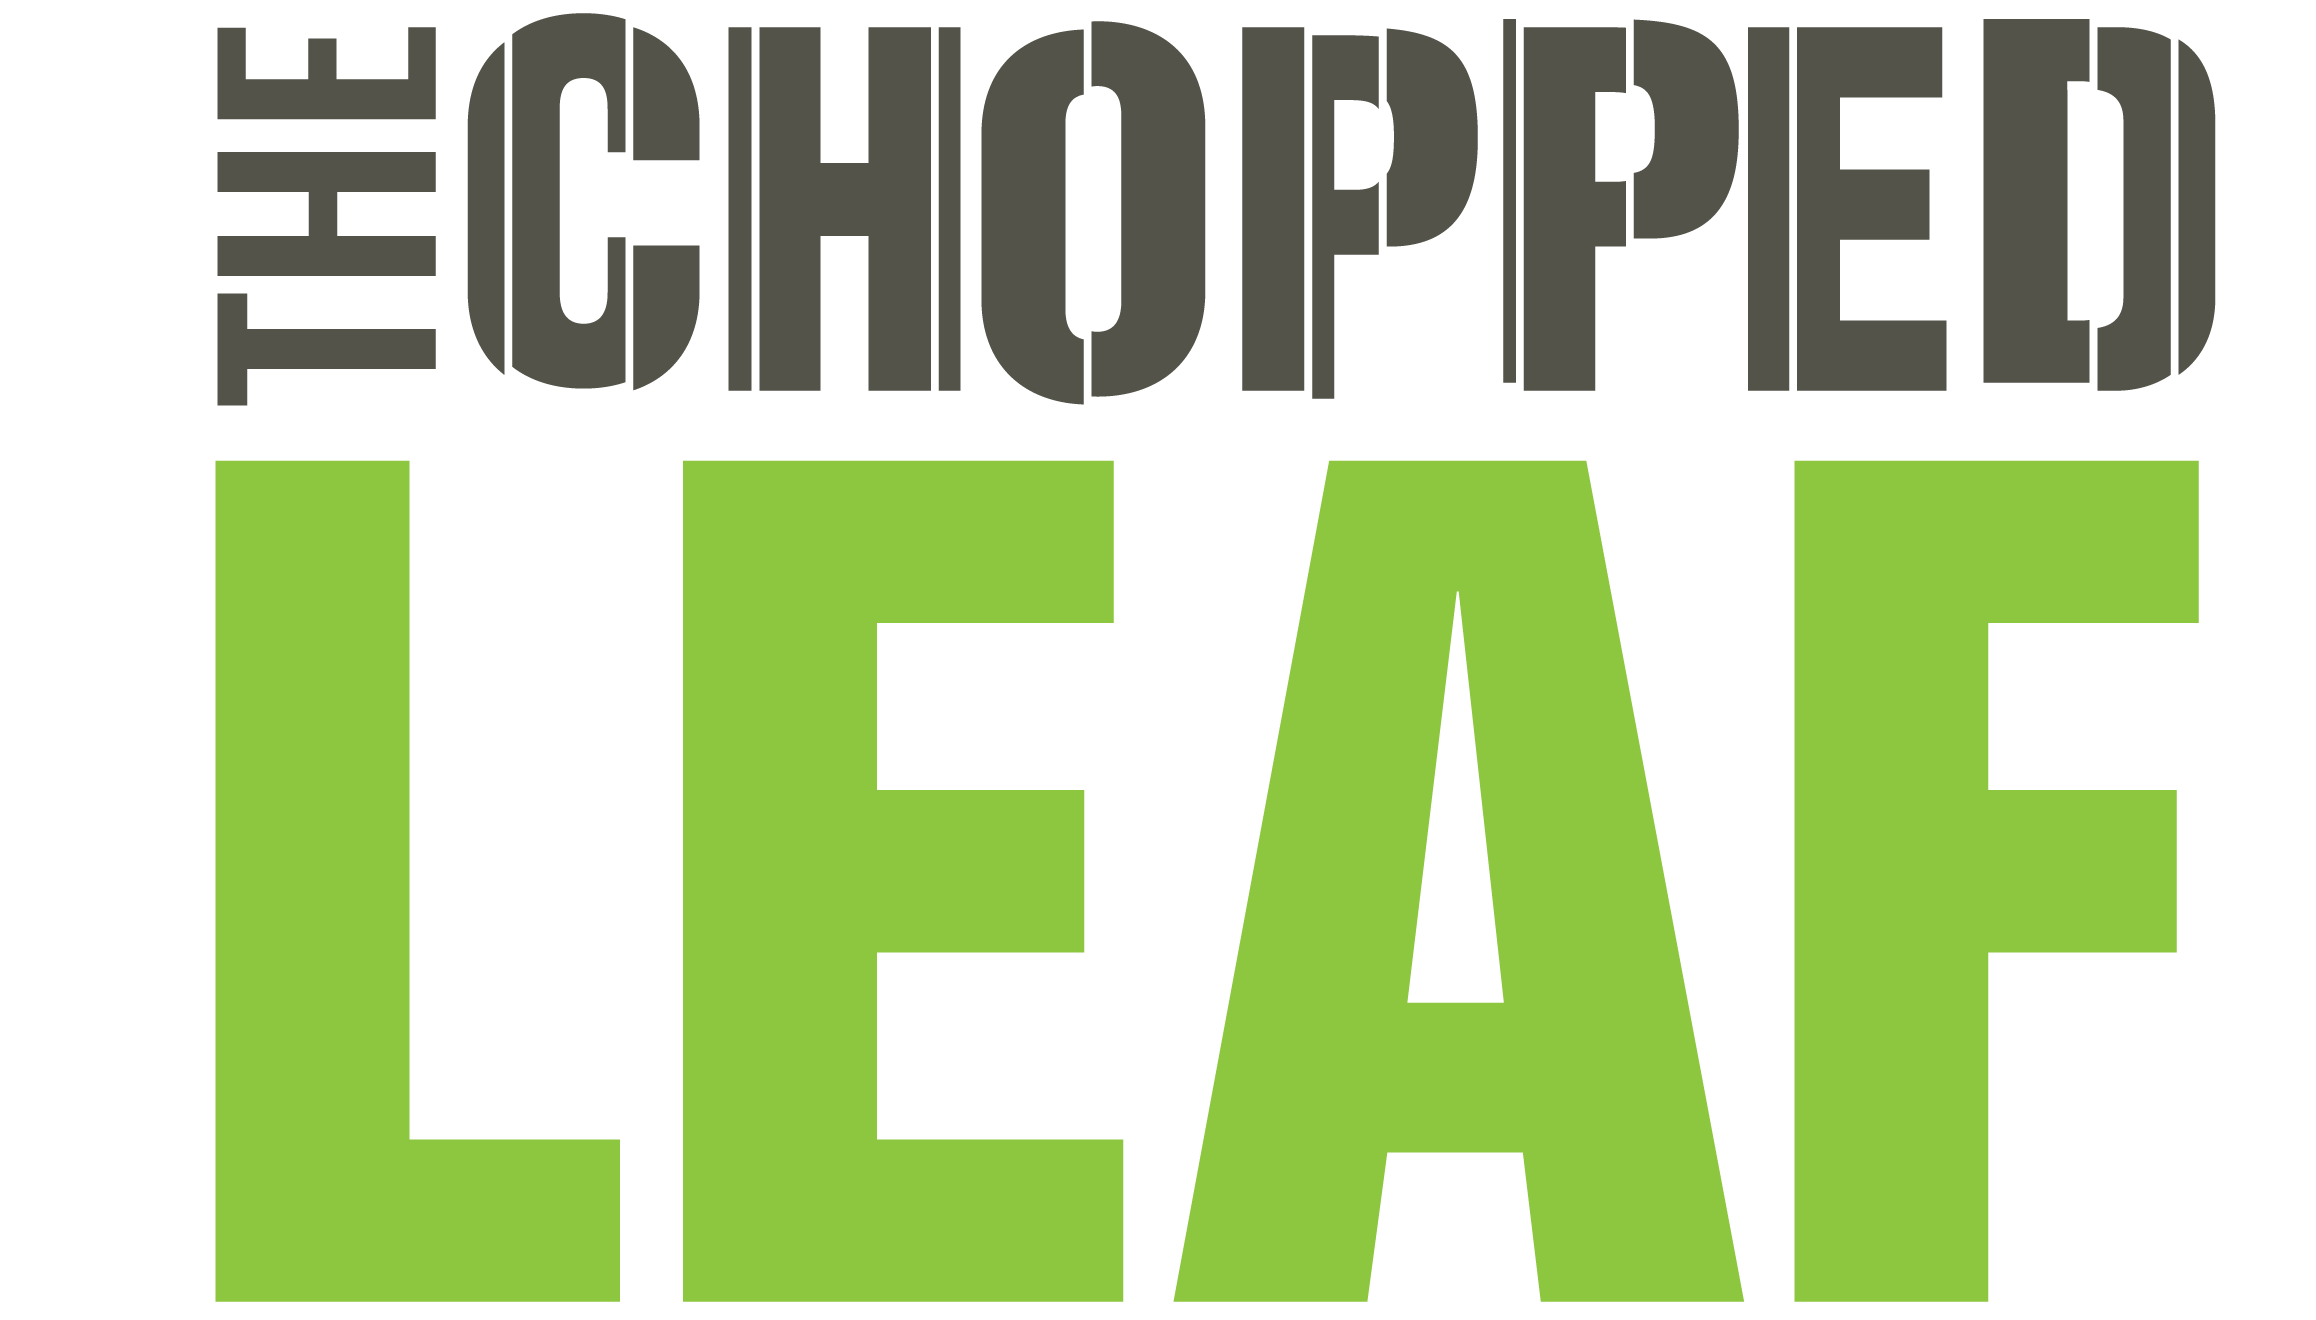 The Chopped Leaf logo